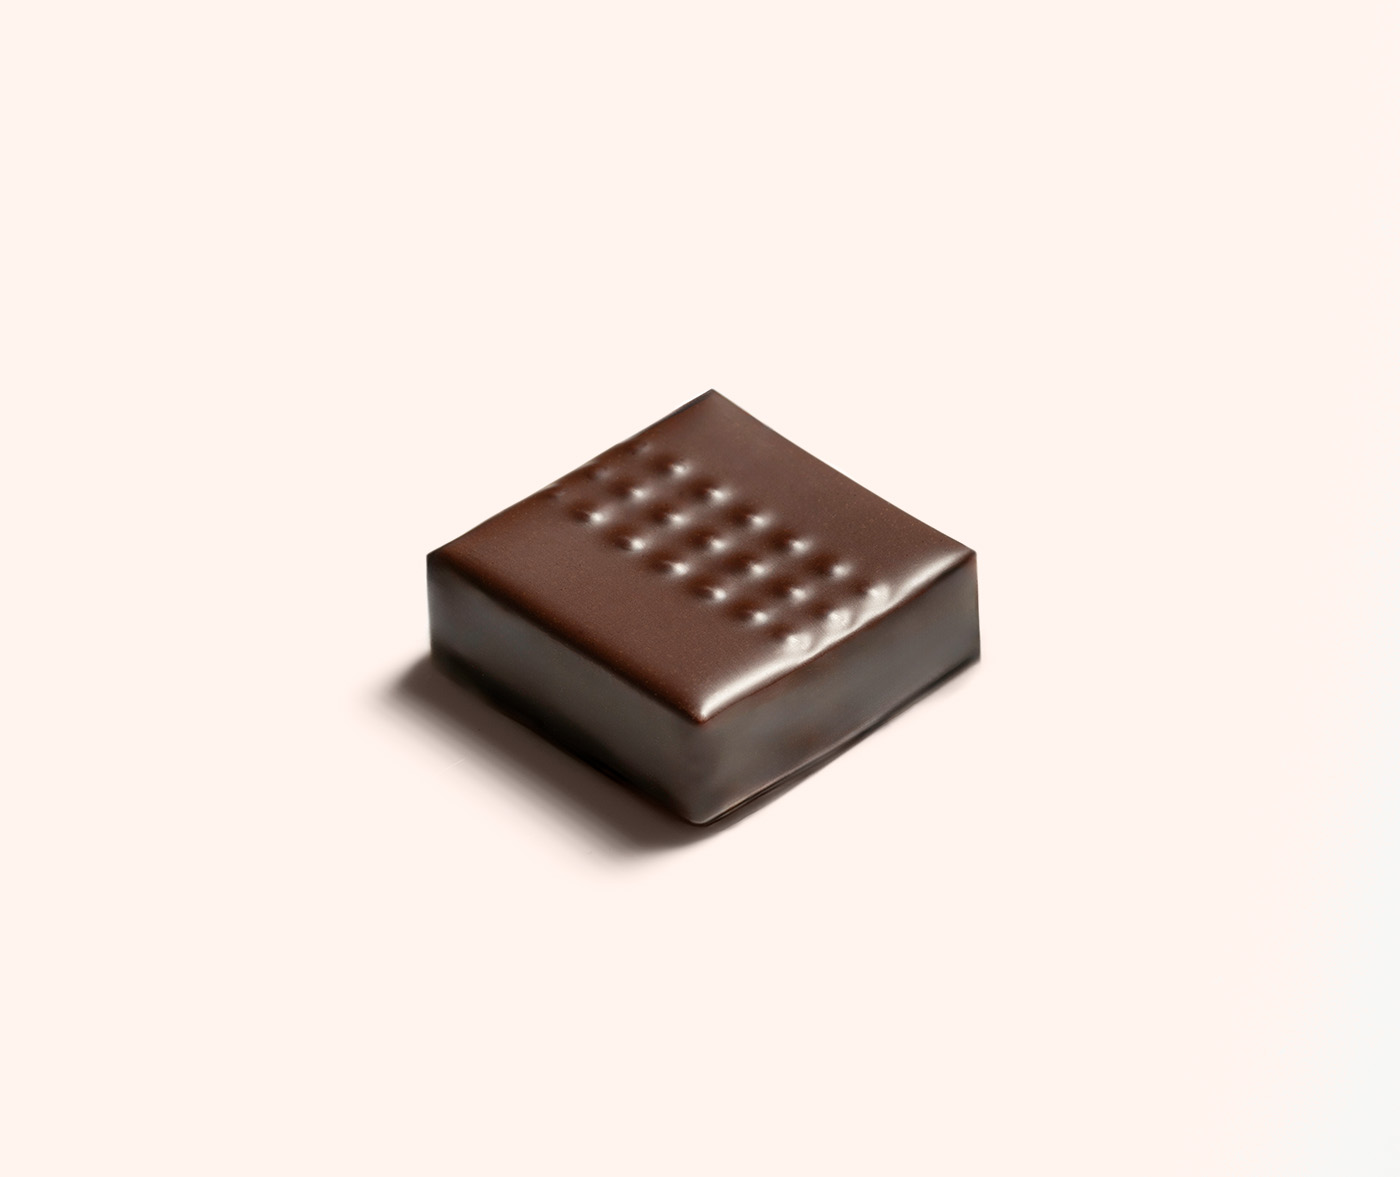 Chocolats - La Chocolaterie William Artigue